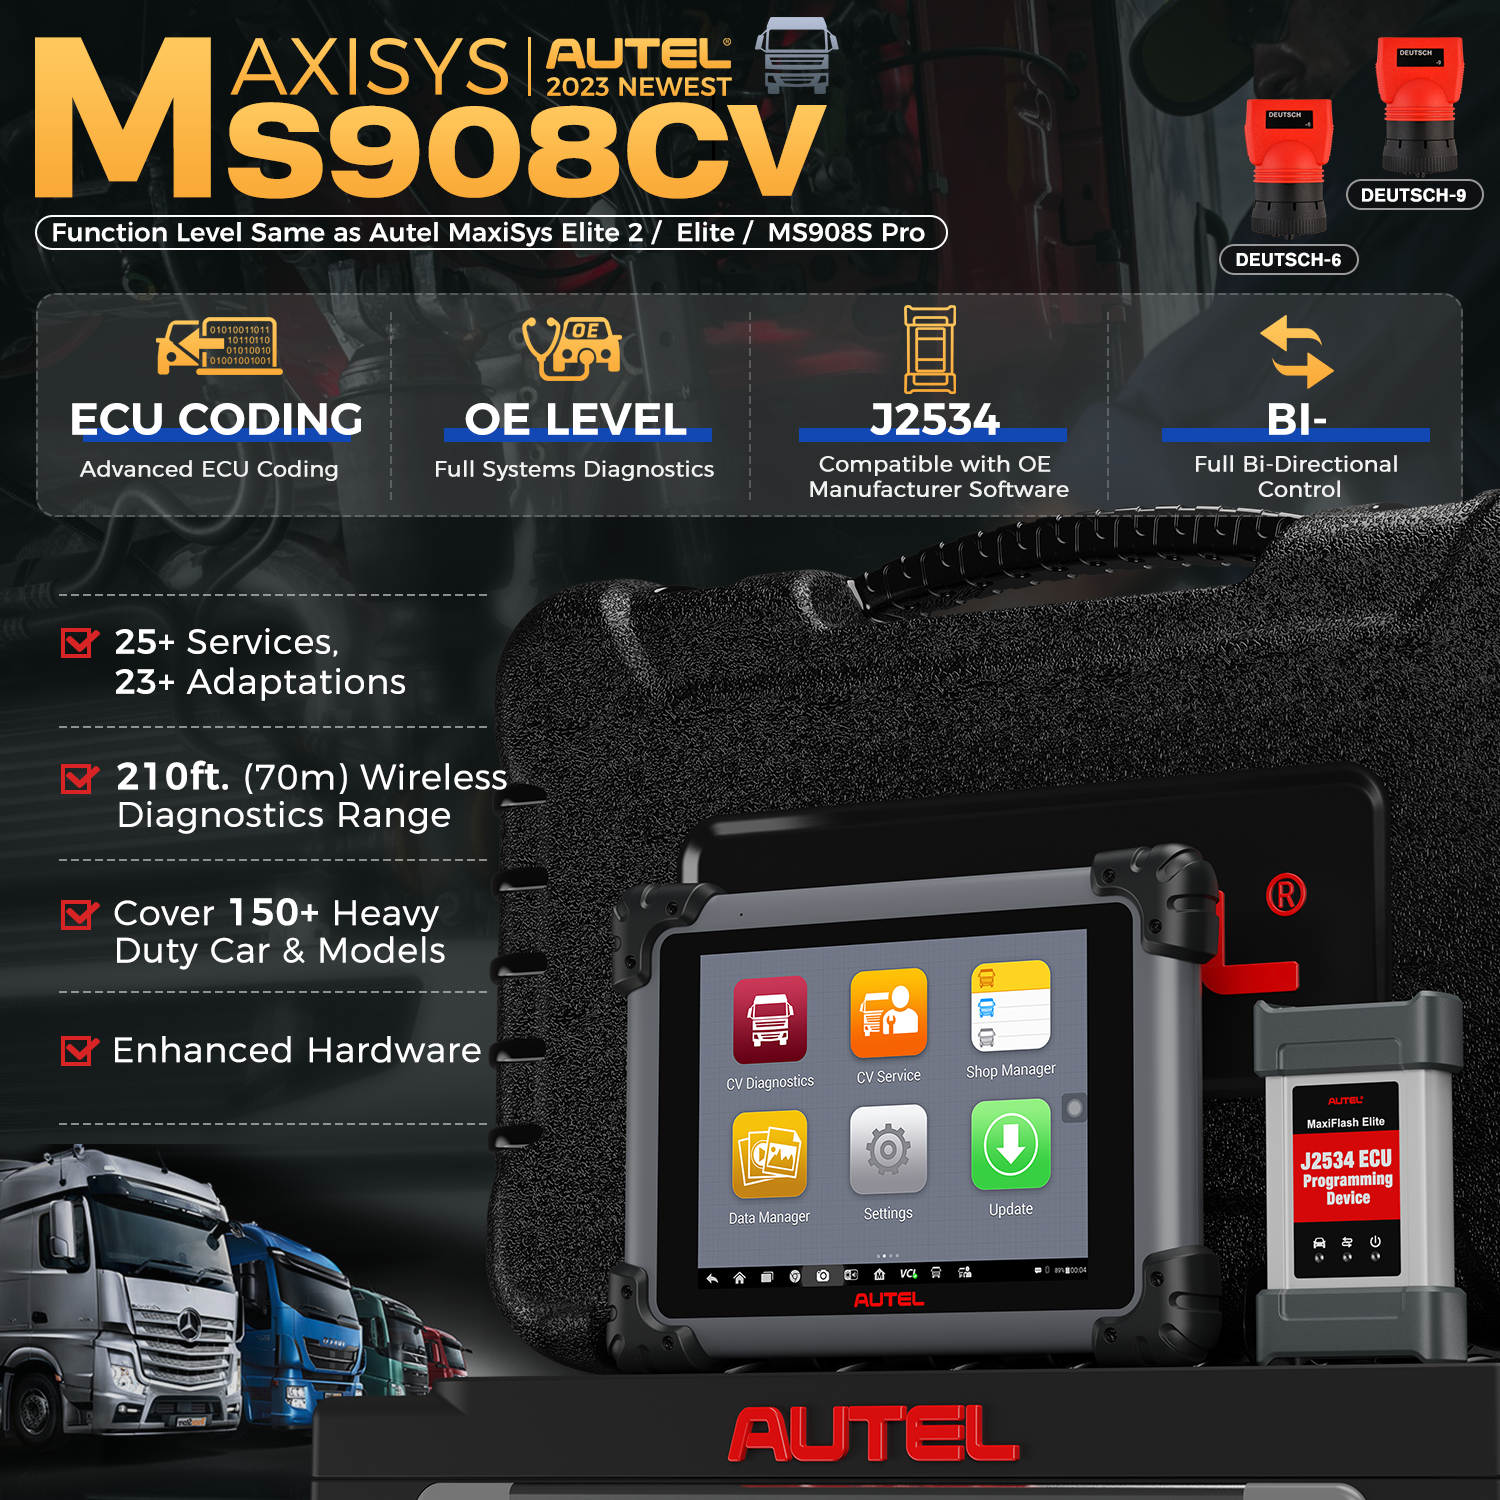 Autel Maxisys MS908CV features